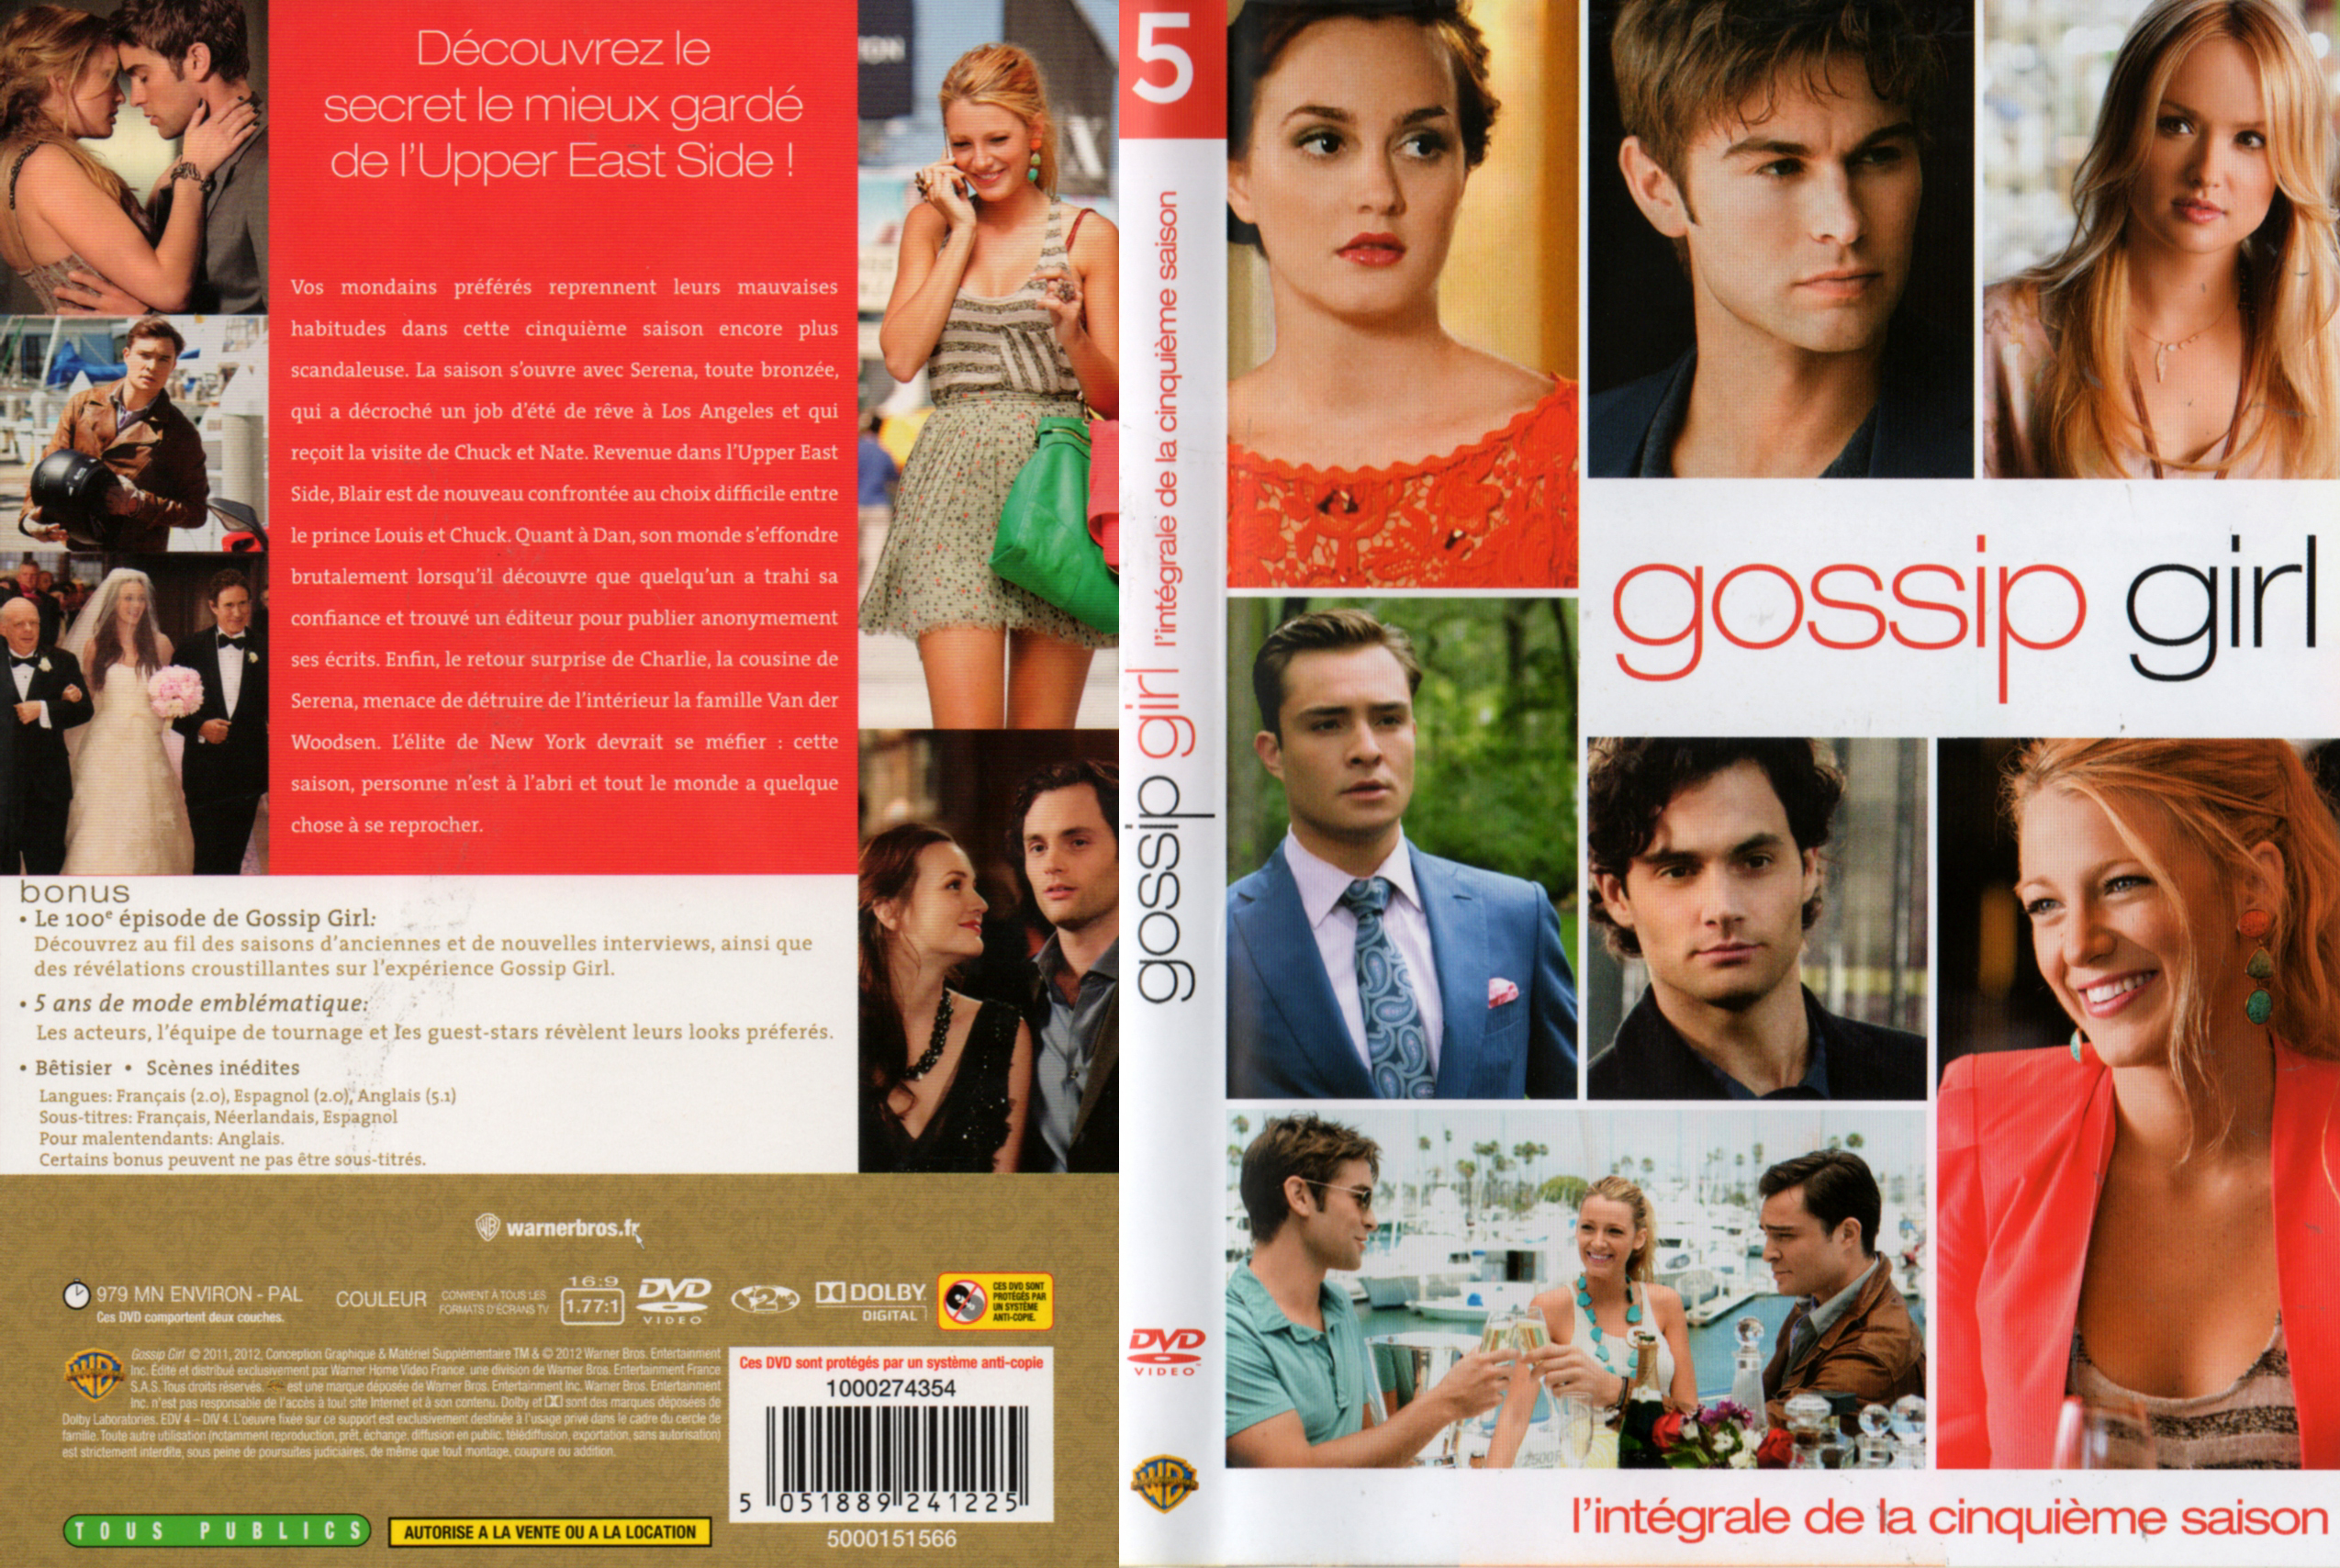 Jaquette DVD Gossip girl Saison 5 COFFRET